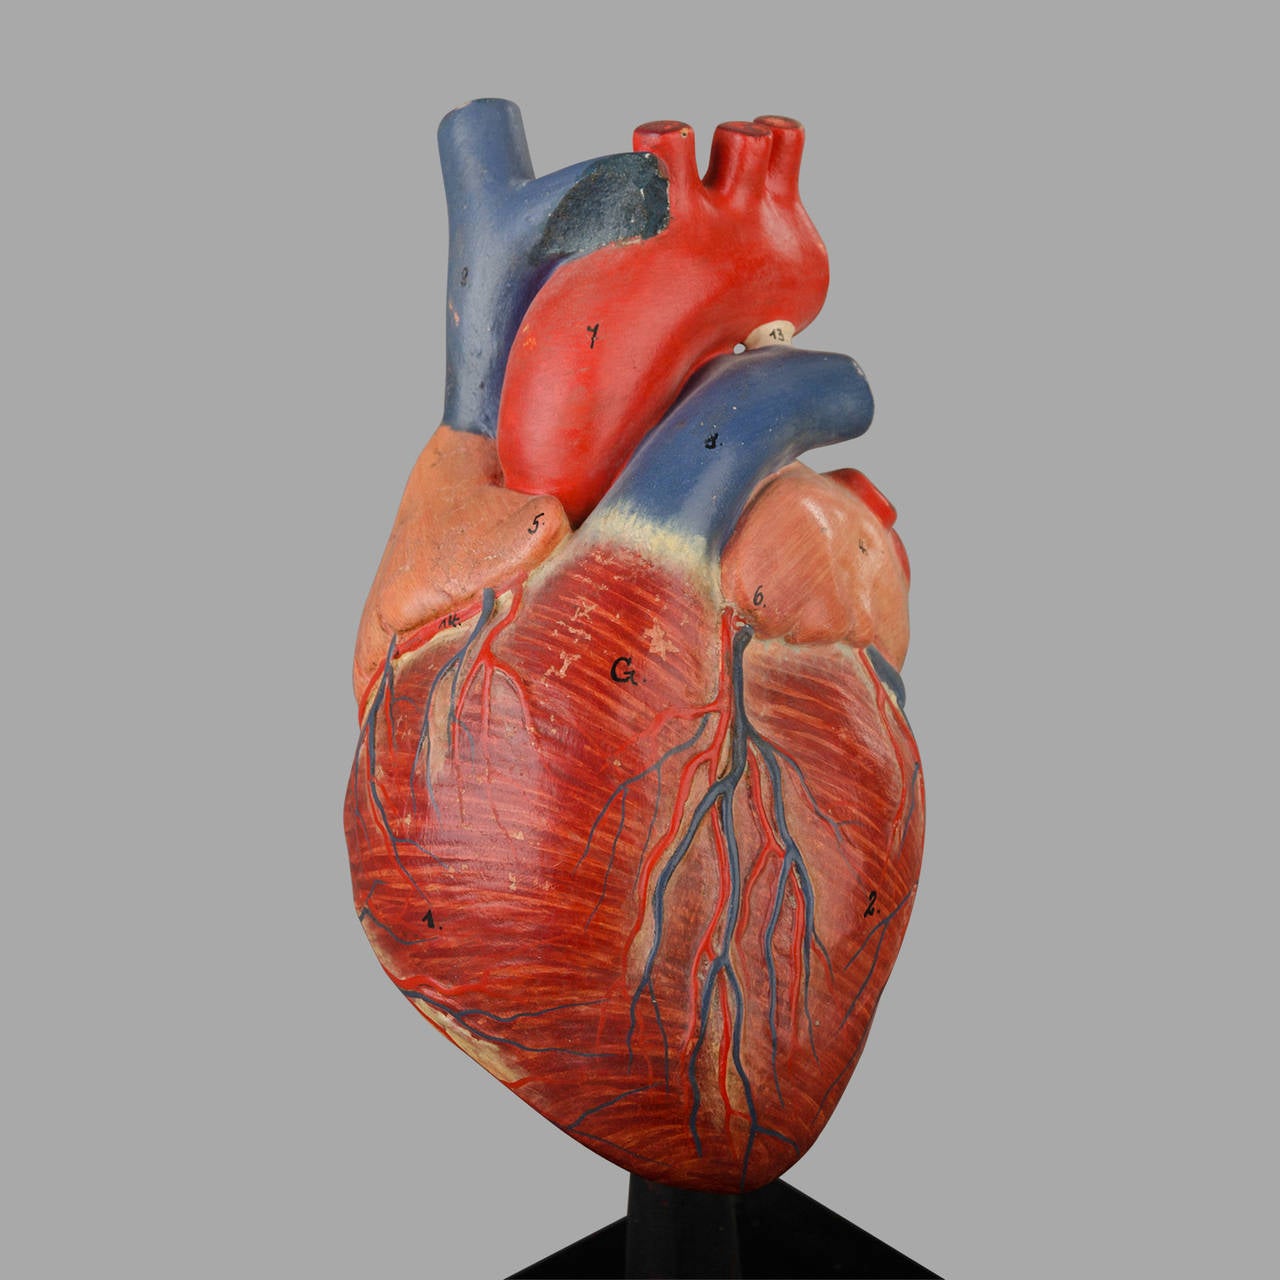 Anatomical Model Of The Human Heart At 1stdibs